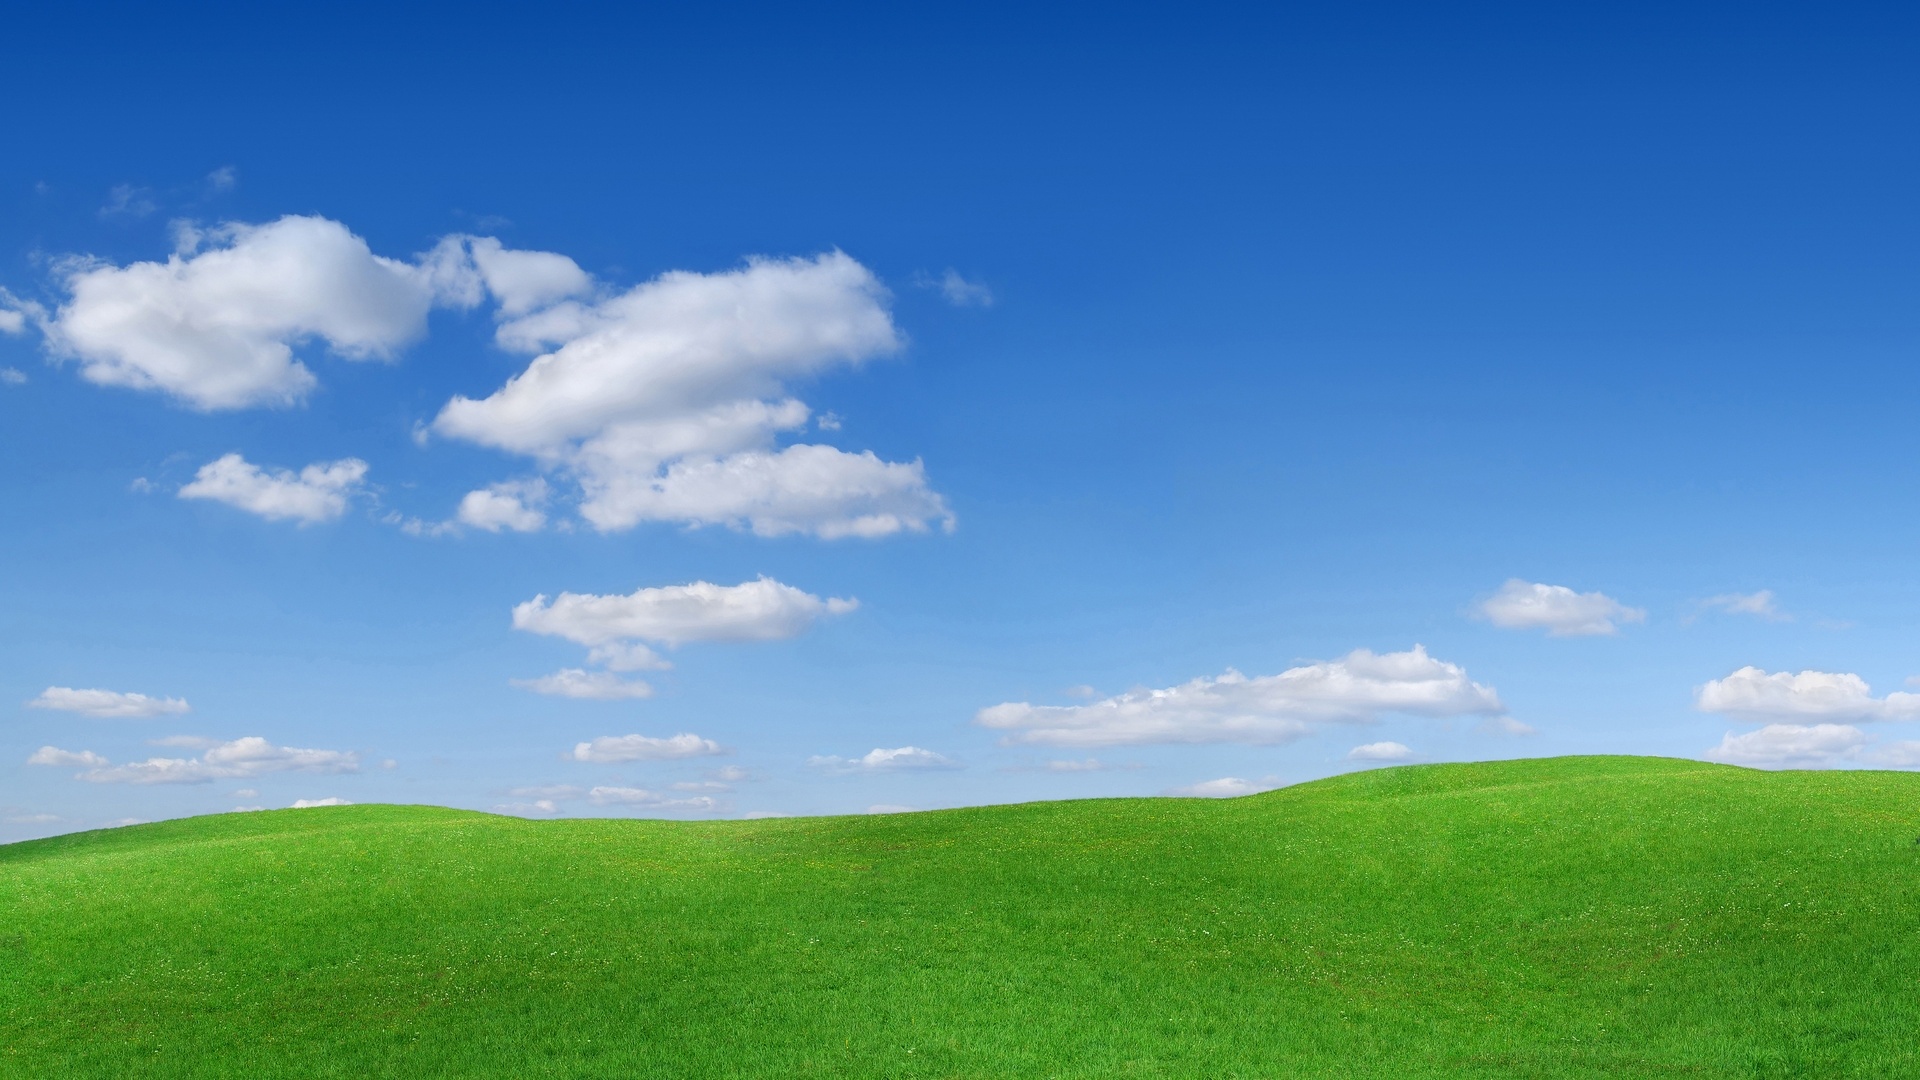 Sky And Grass Image